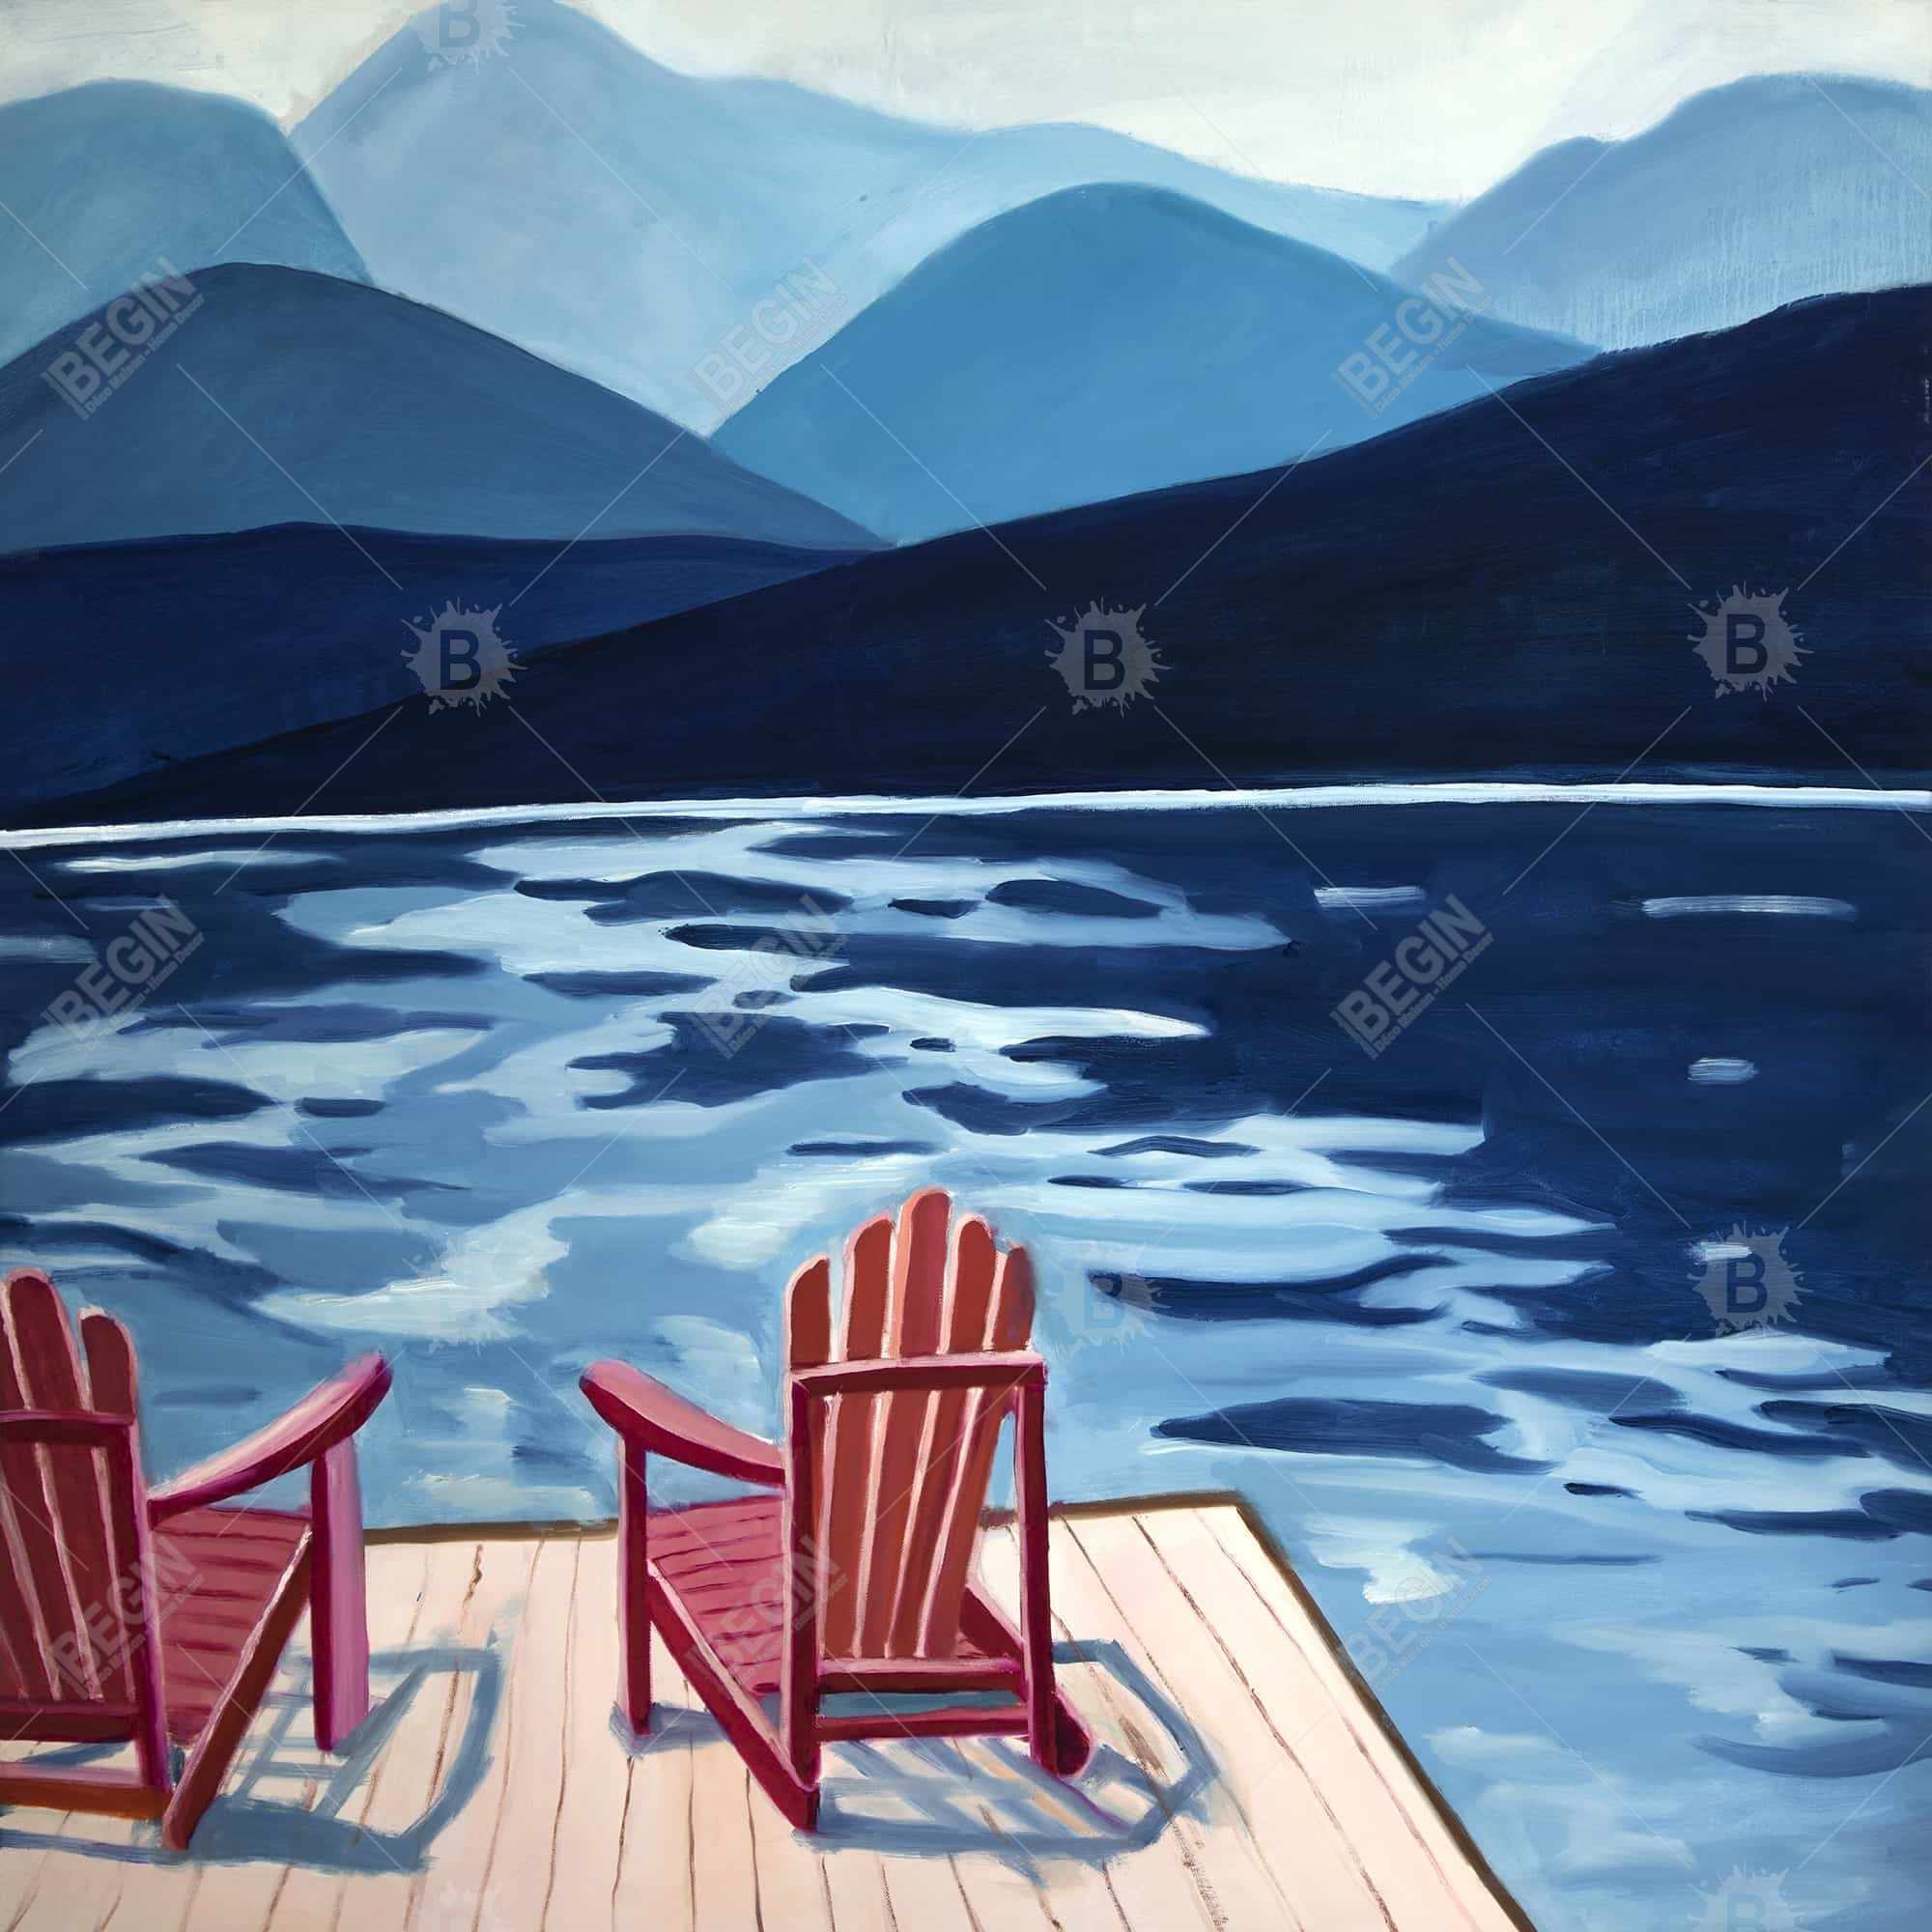 Lake, dock, mountains & chairs